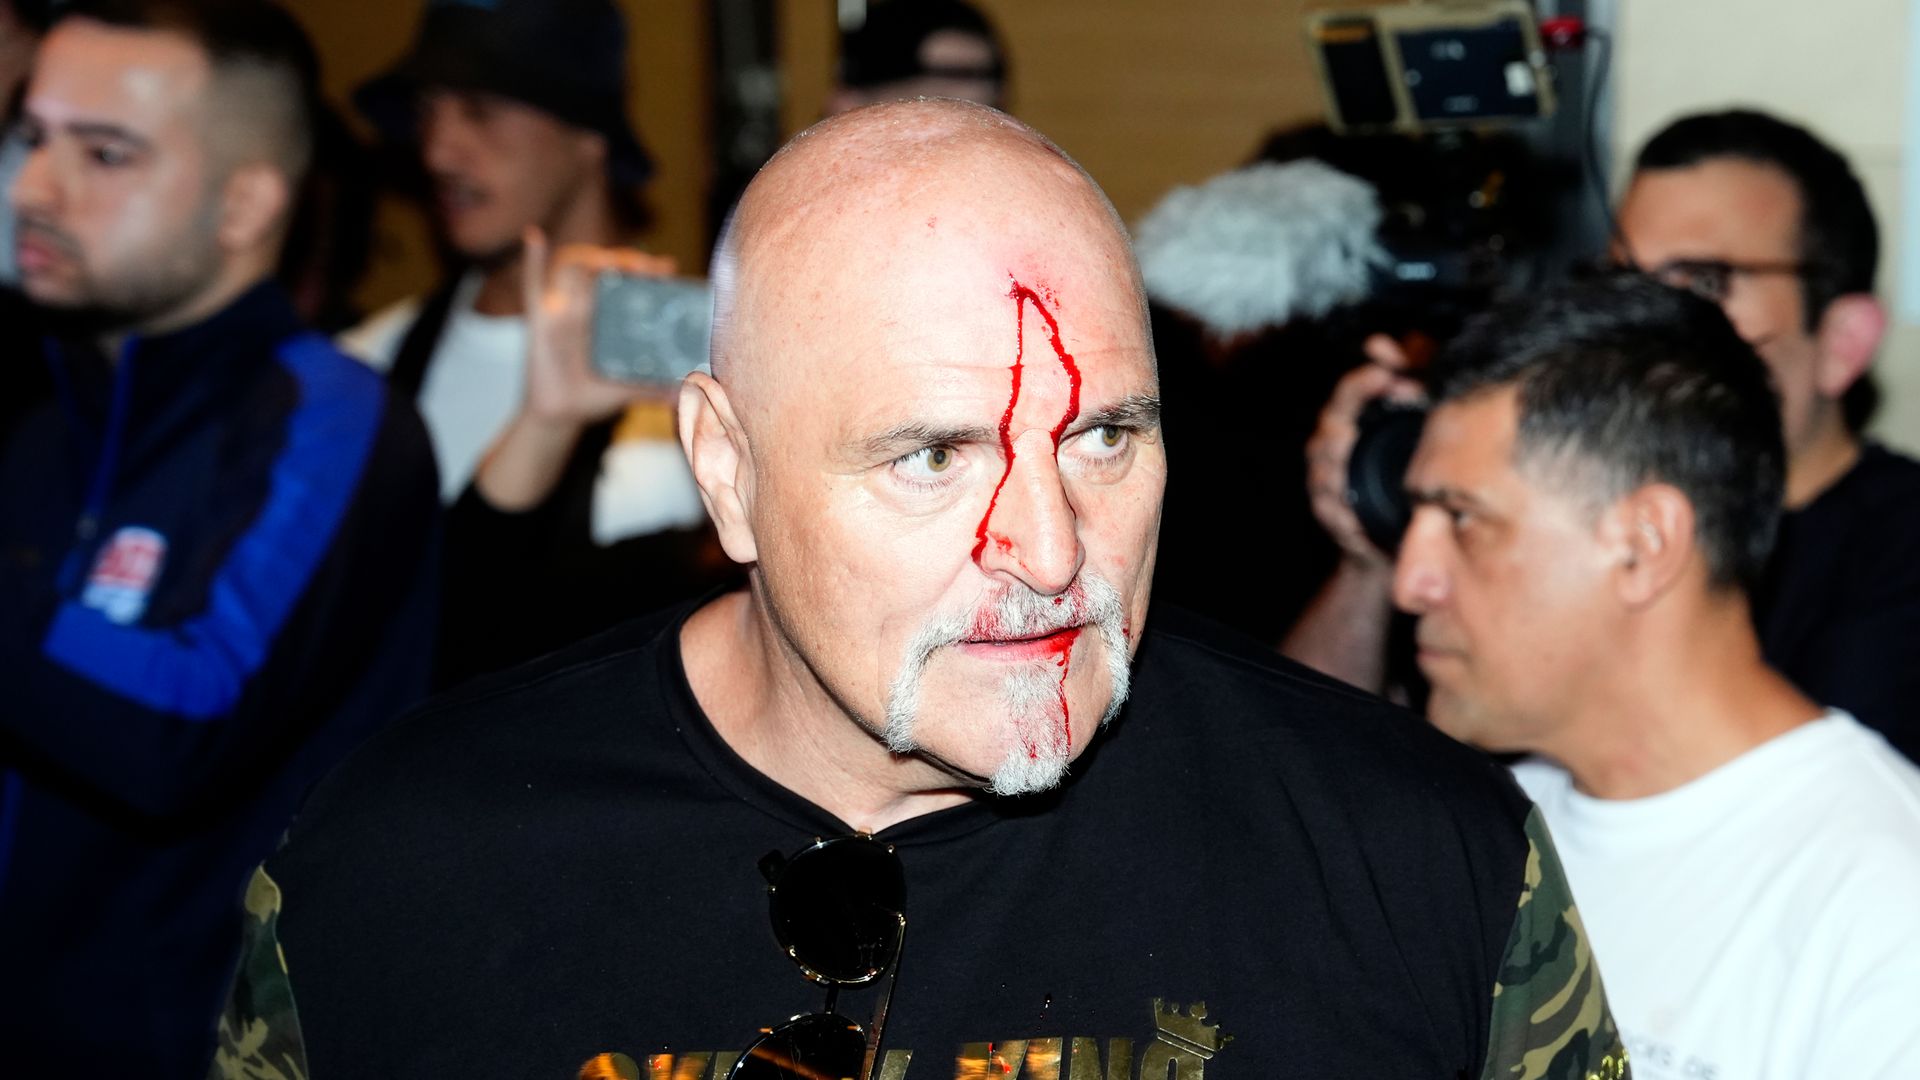 Tyson Fury's dad appears to headbutt member of Oleksandr Usyk's entourage